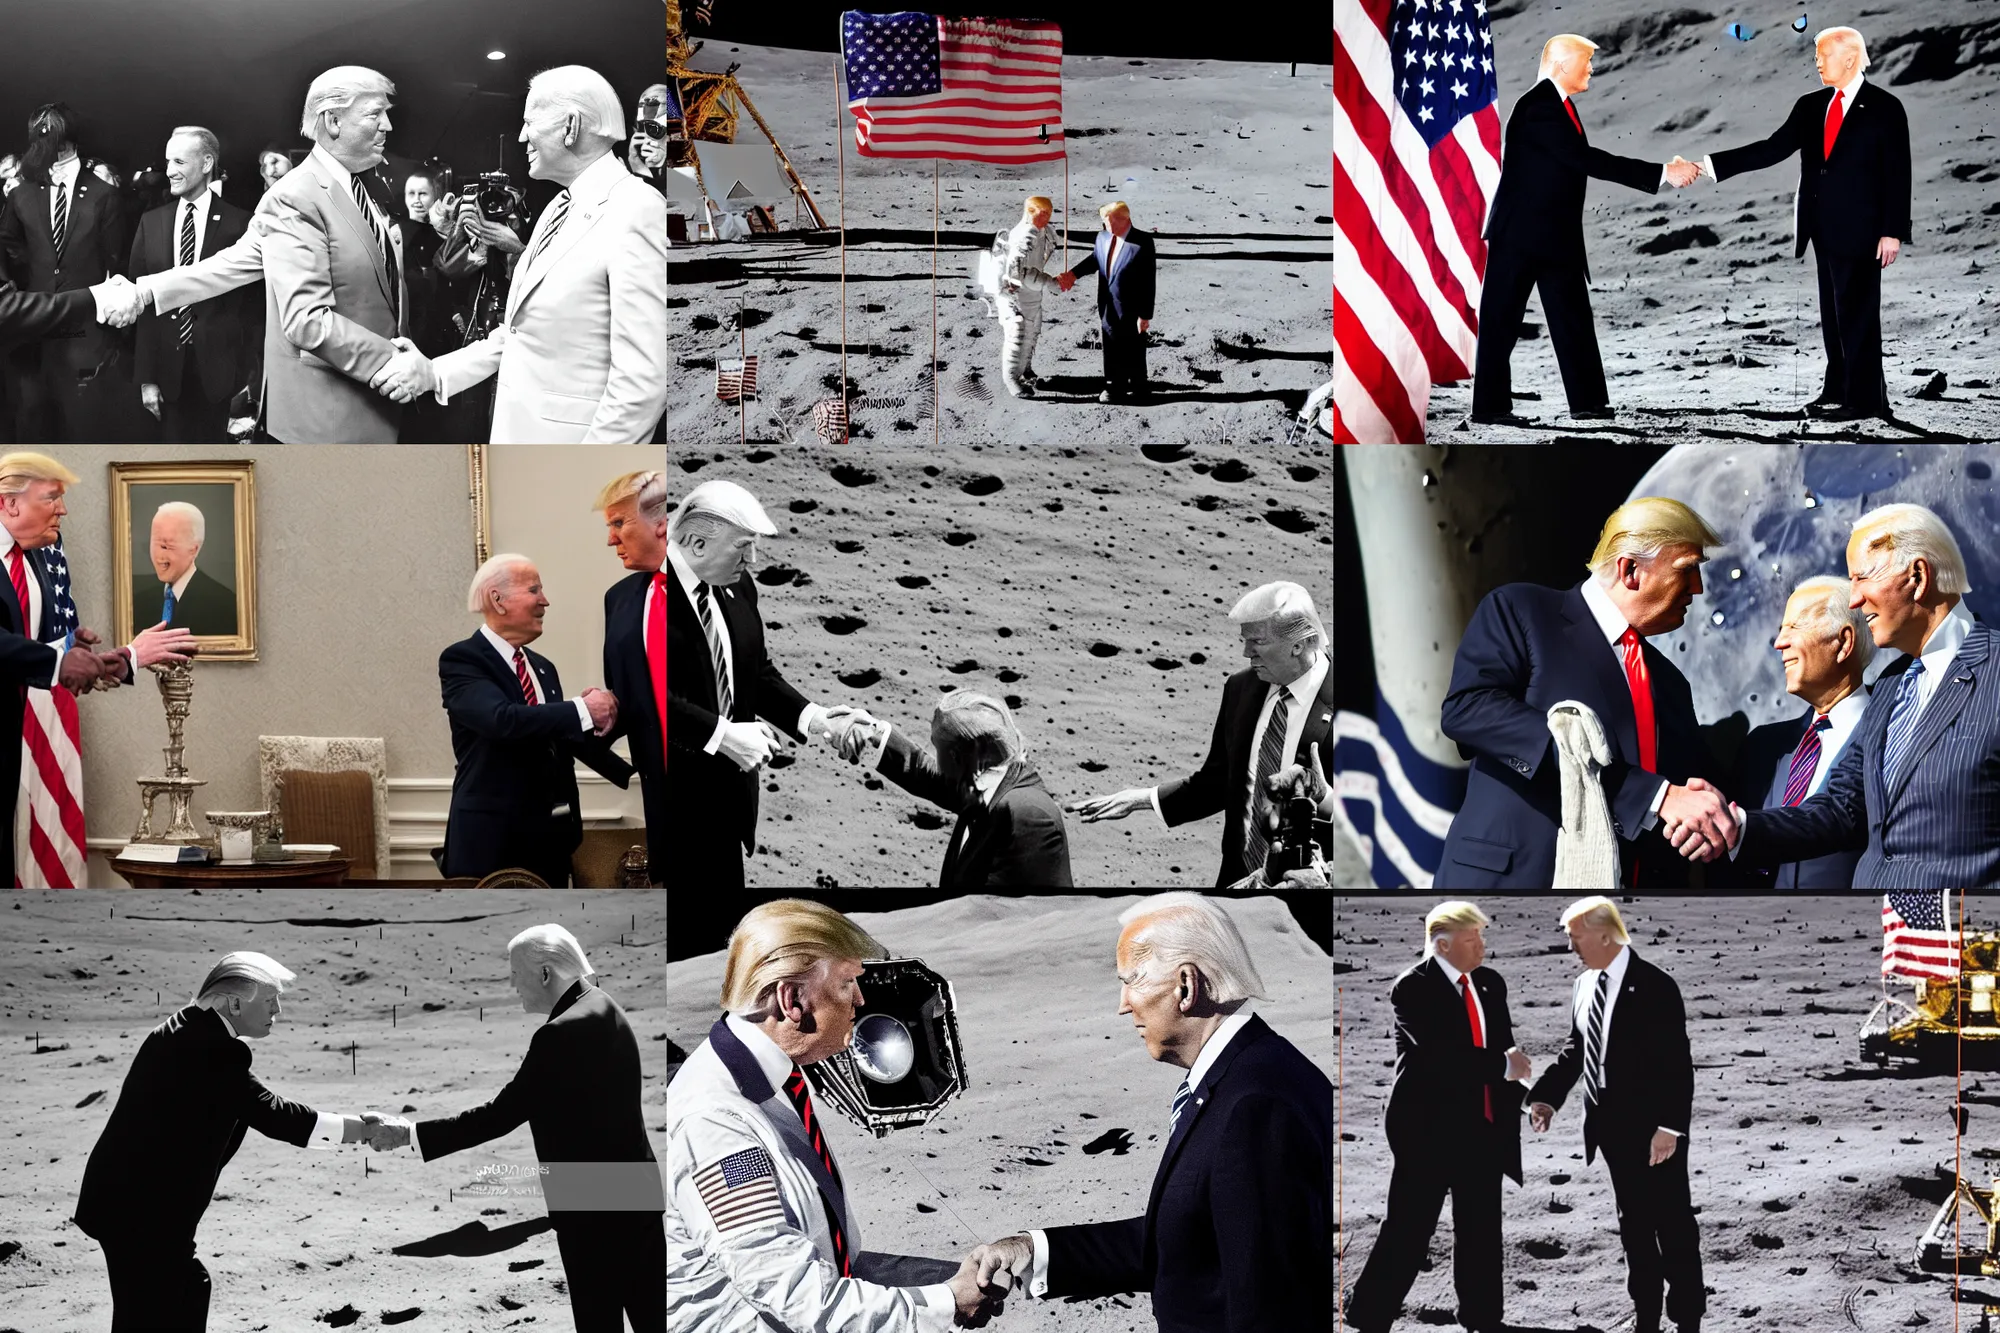 Prompt: lens camera photo cinematic portrait donald trump shaking hands with joe biden on the moon, award winning